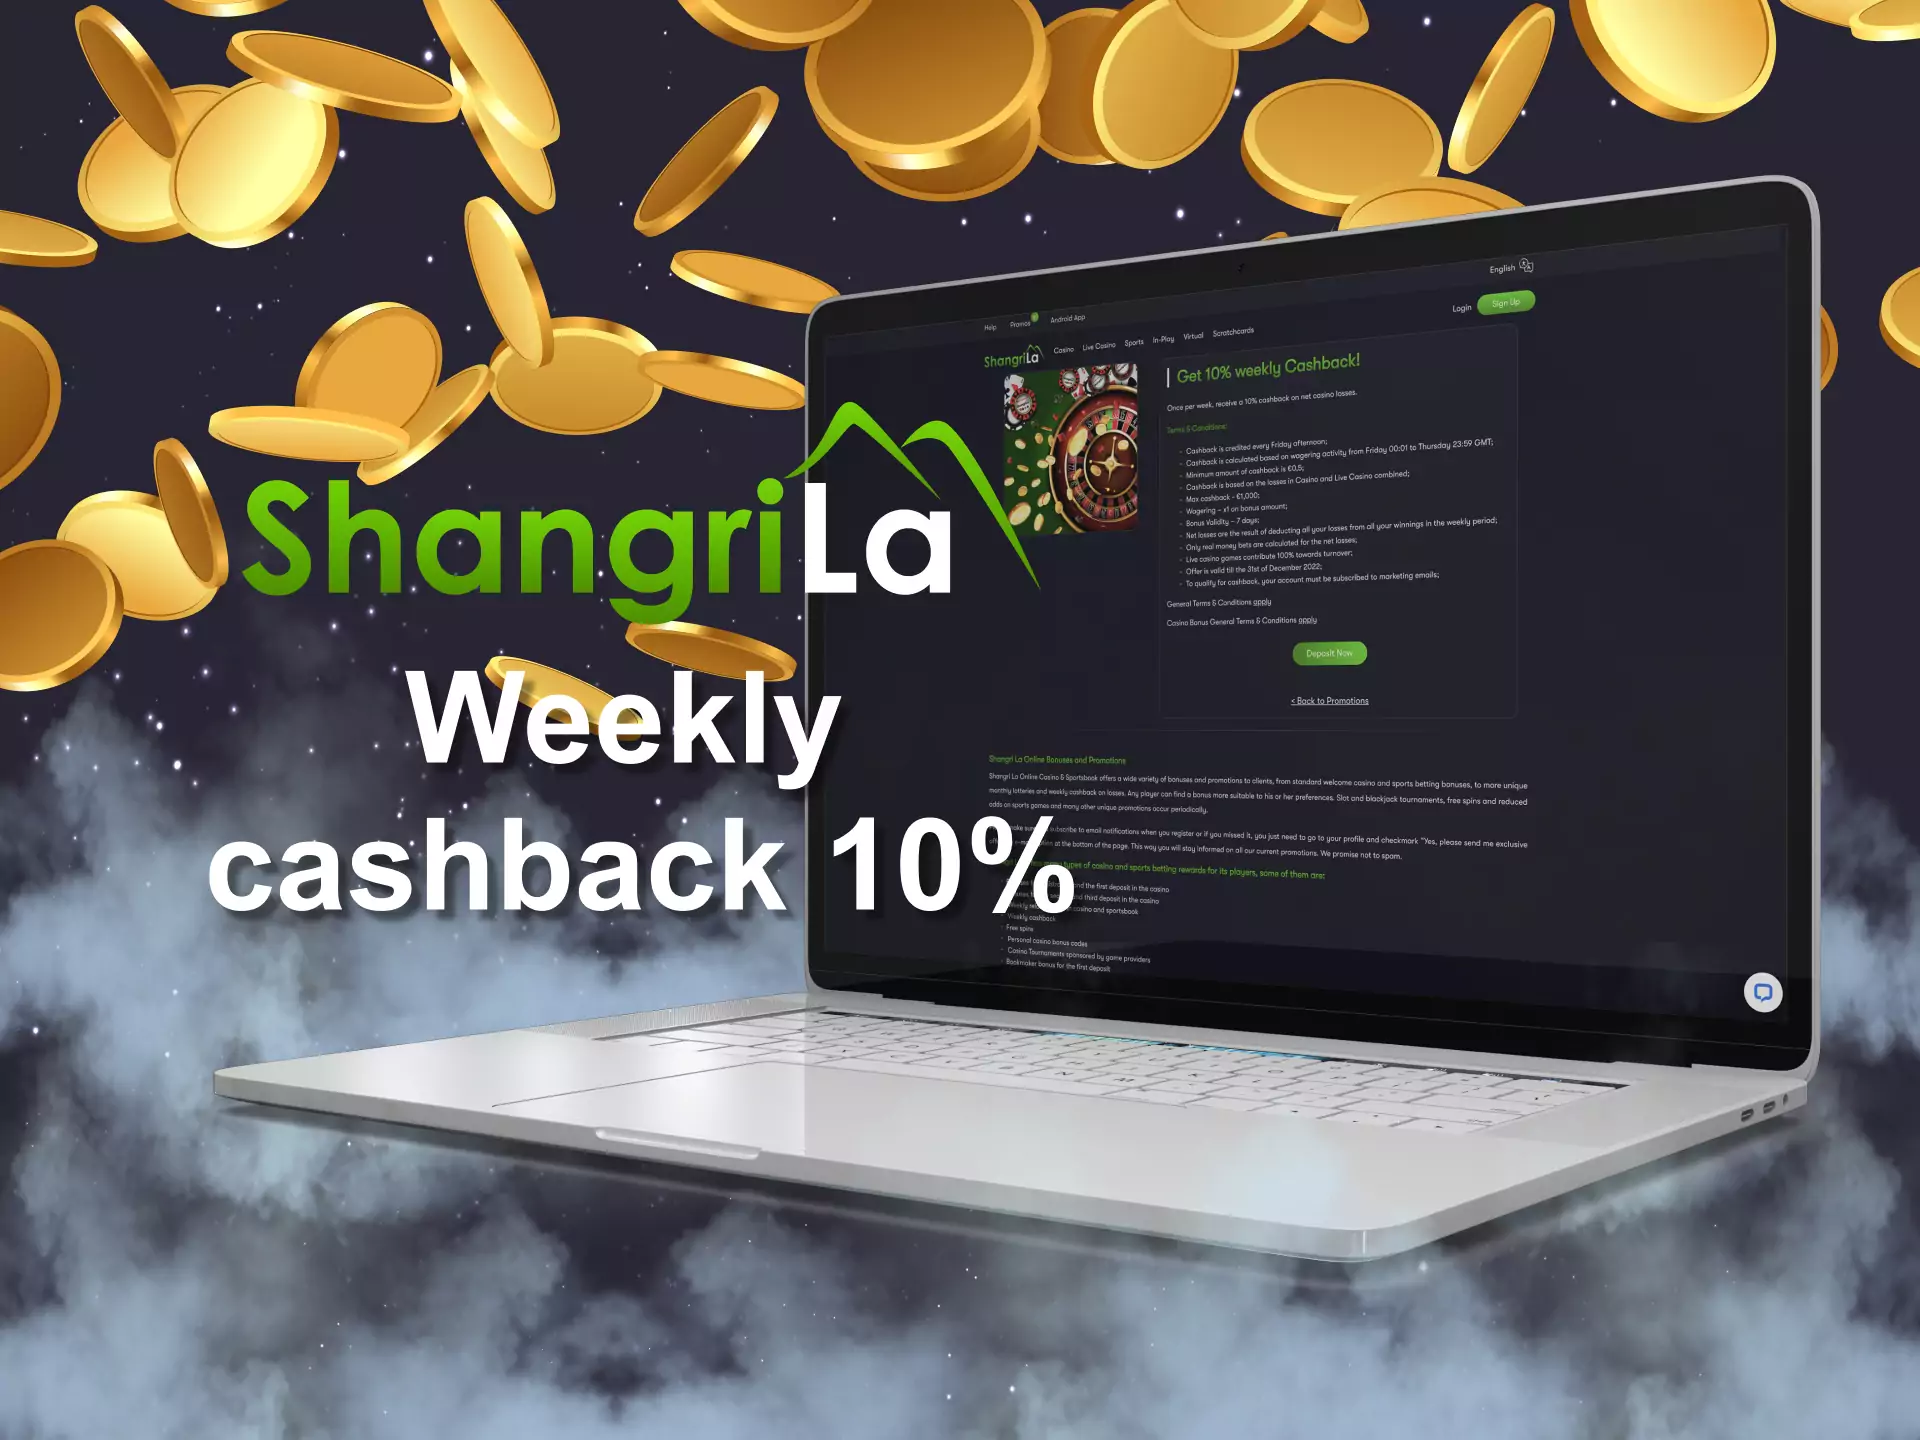 A weekly cashback in Shangri La is 10%.